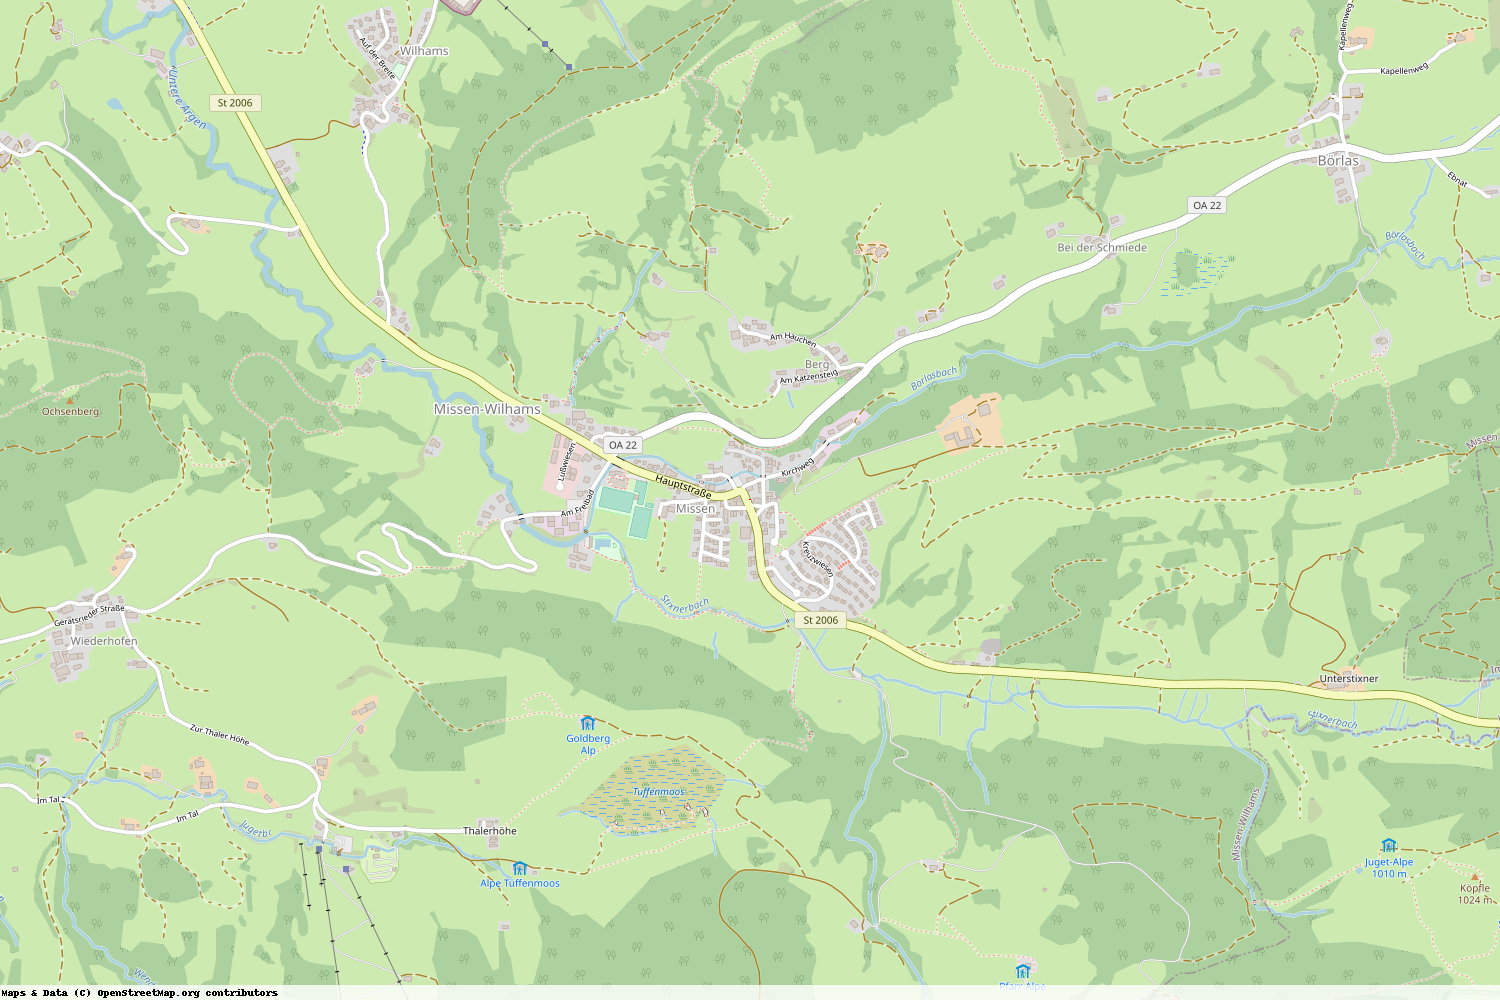 Ist gerade Stromausfall in Bayern - Oberallgäu - Missen-Wilhams?